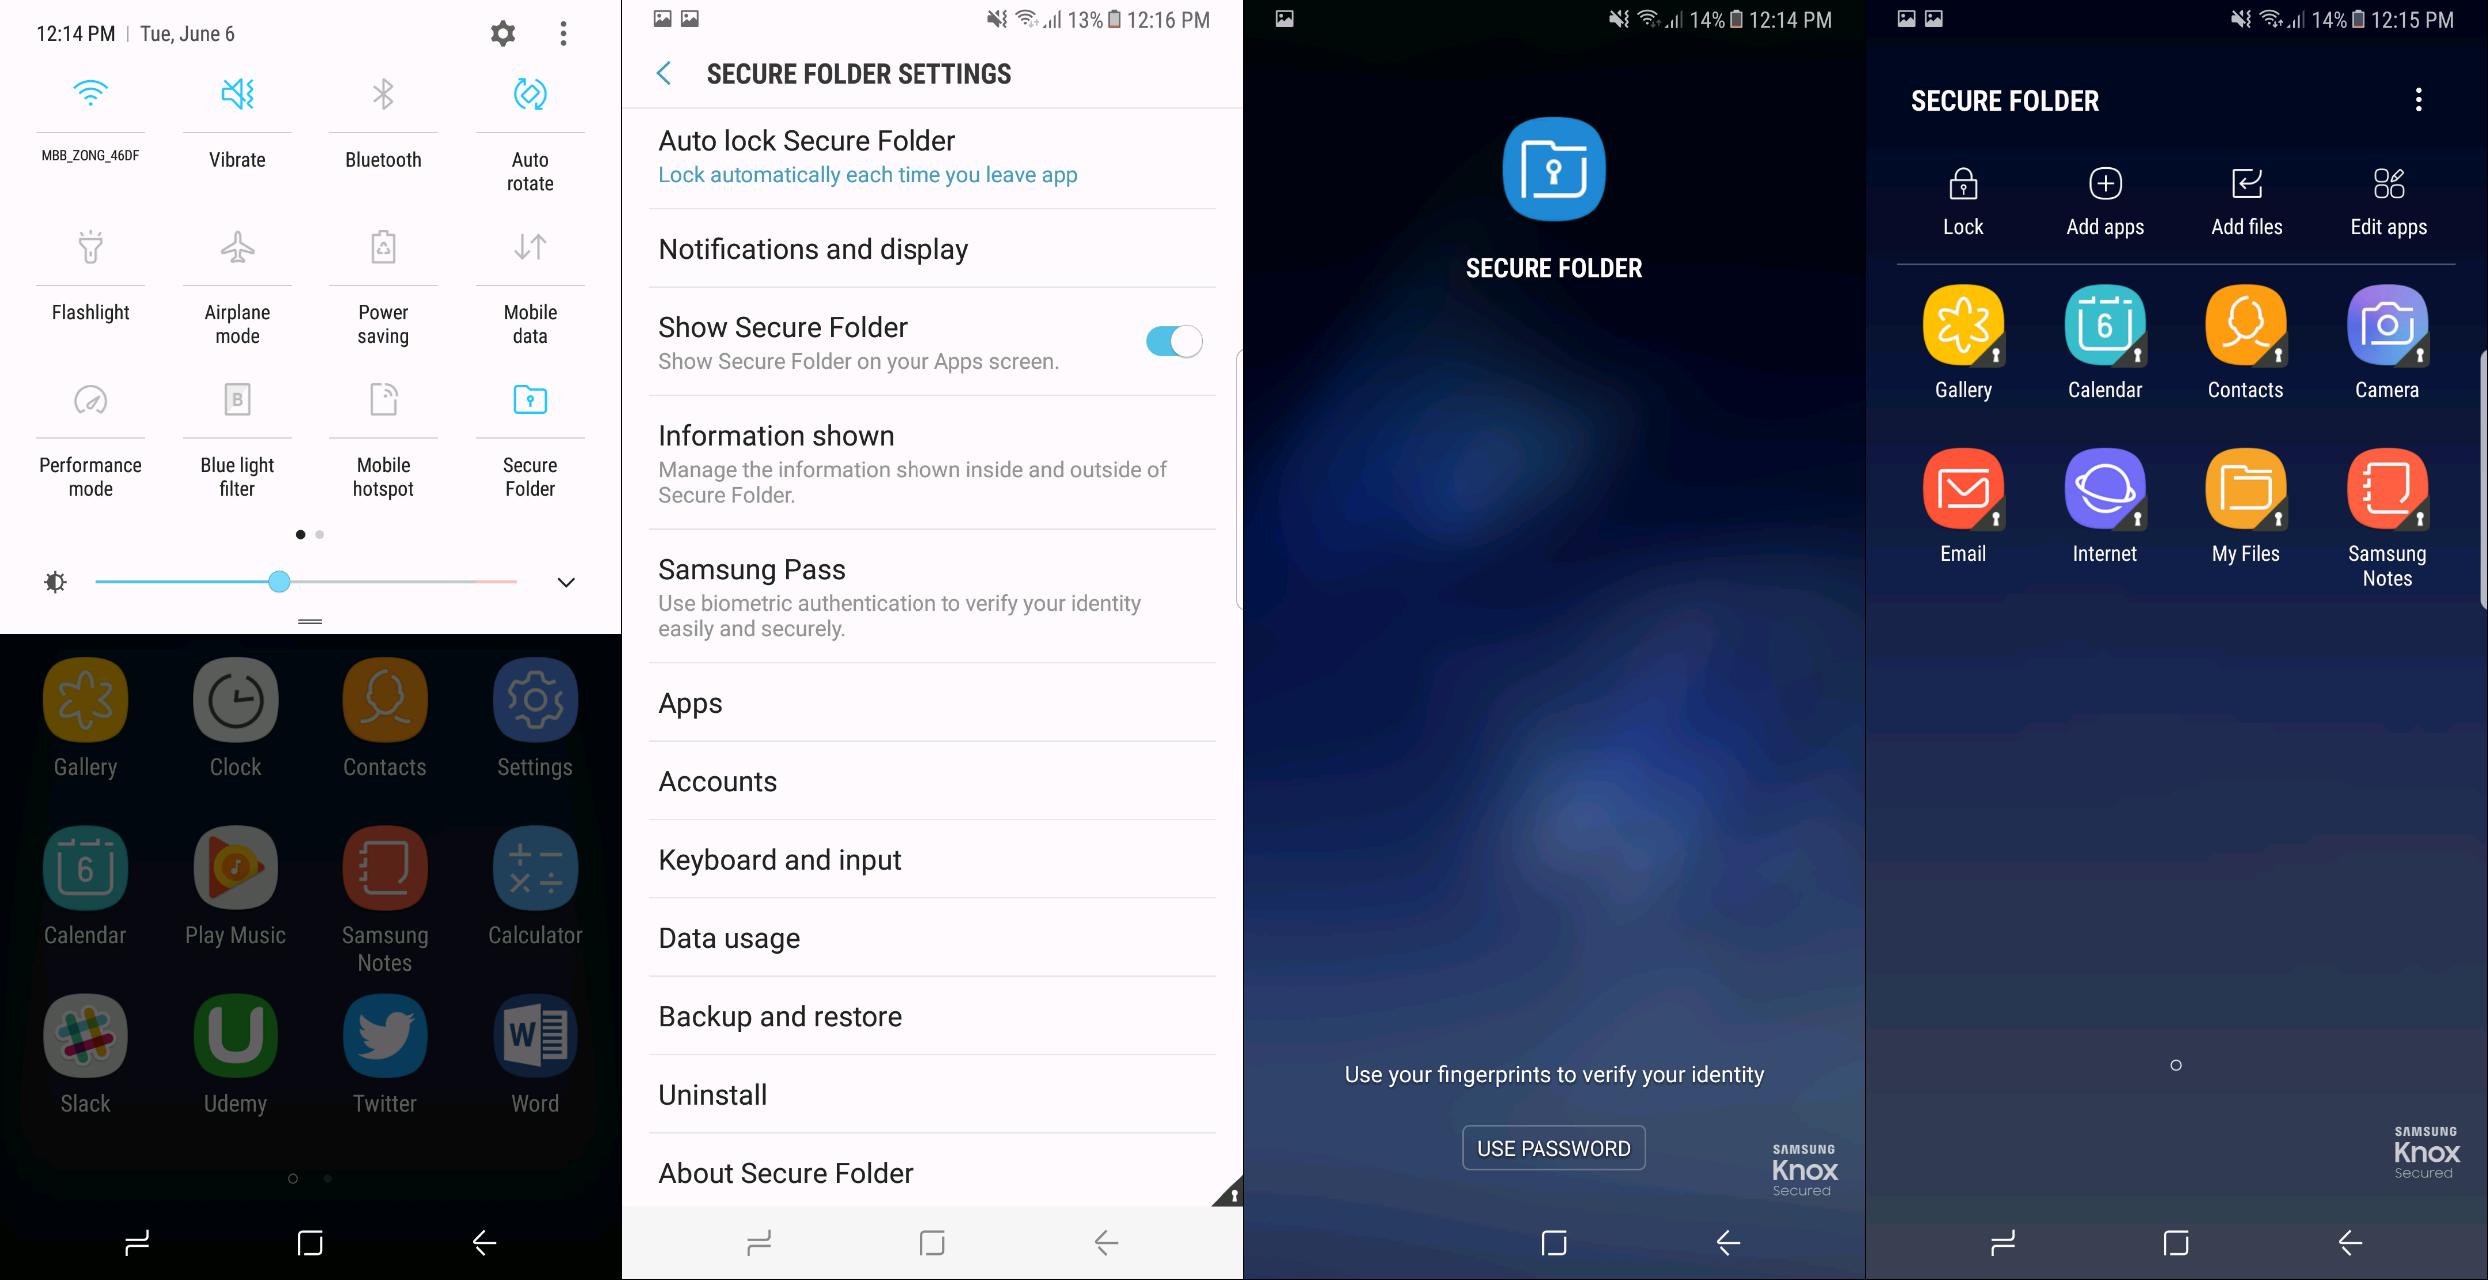 Galaxy S8 Secure Folder